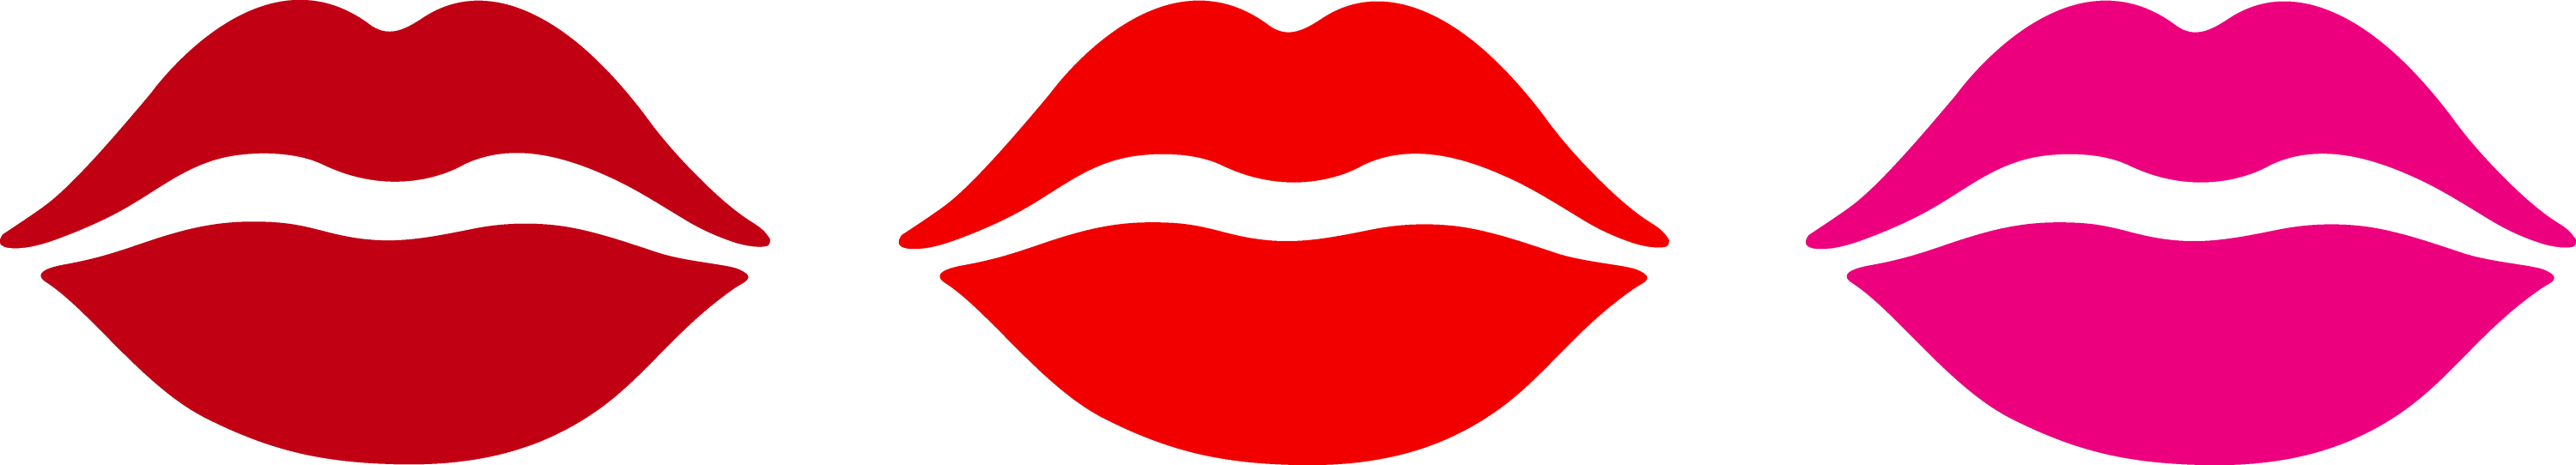 clip art lips kiss - photo #31